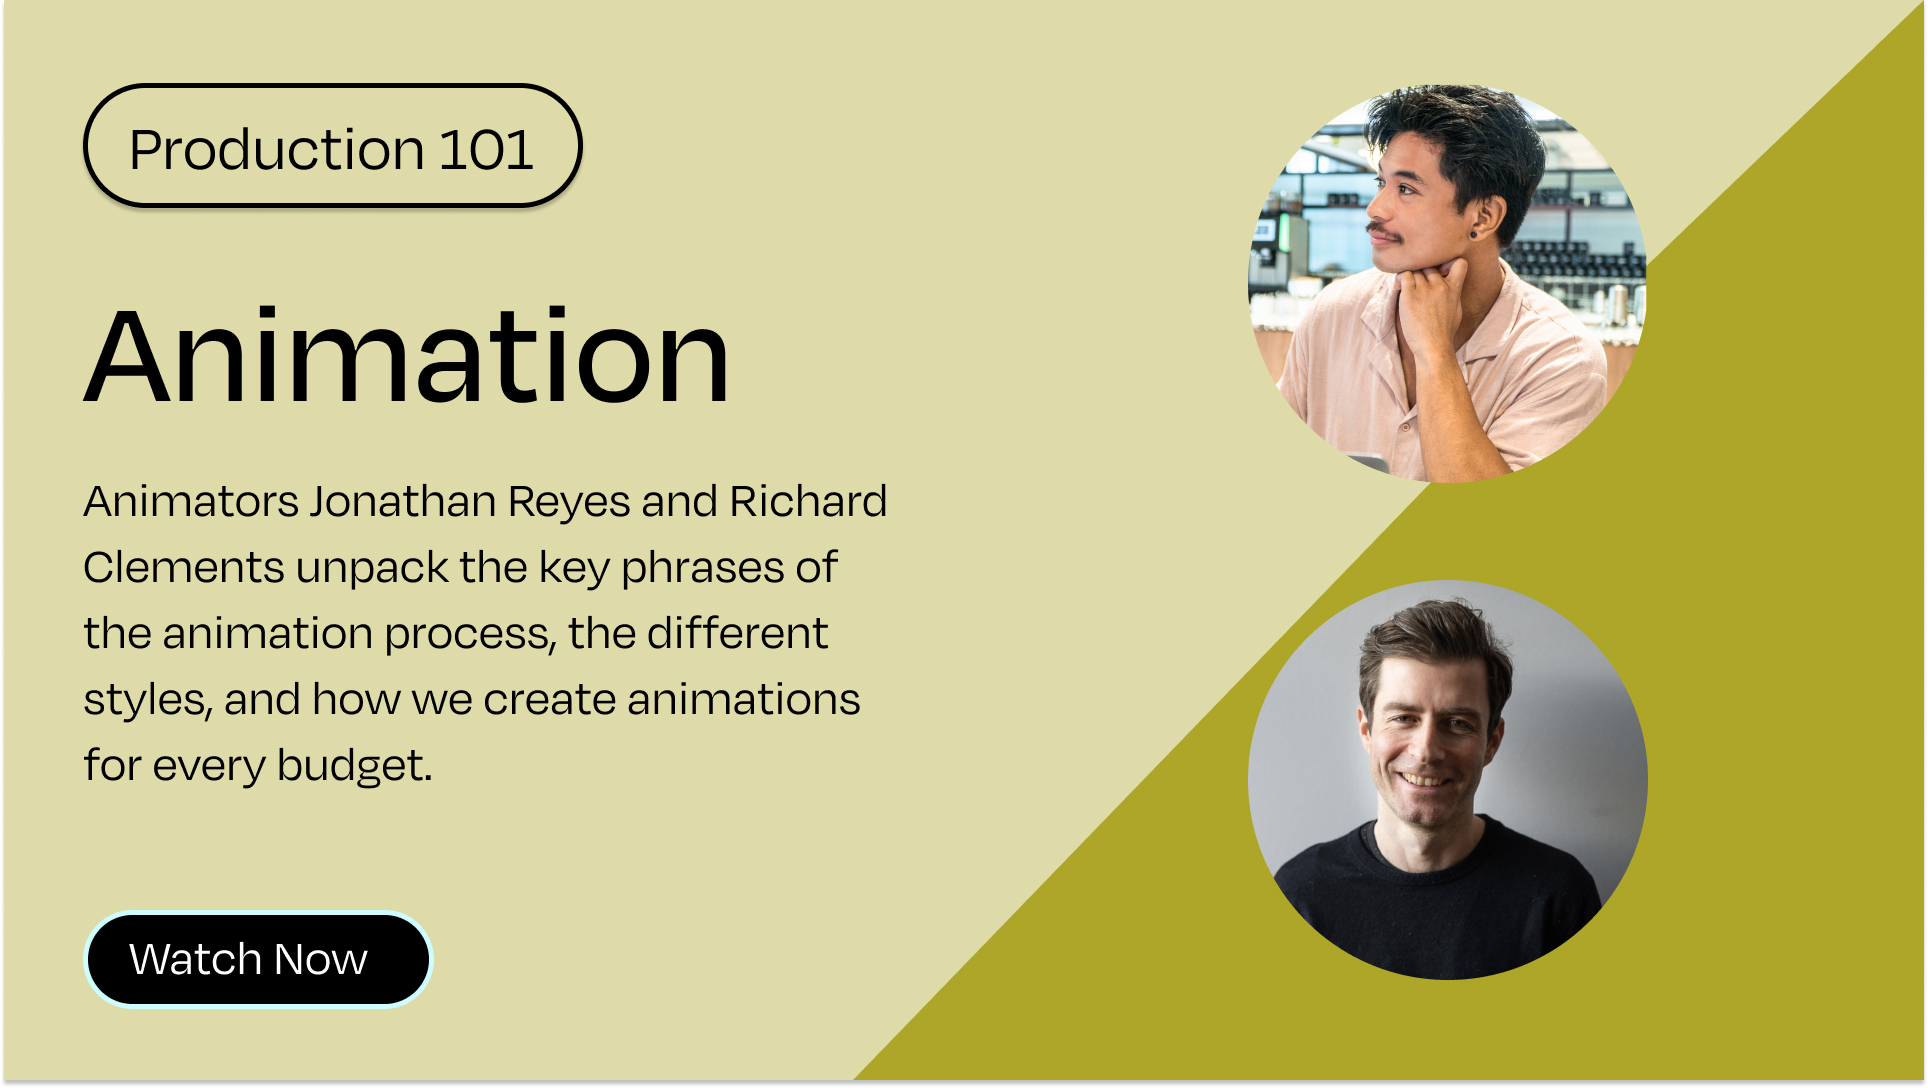 Production 101 - Animation